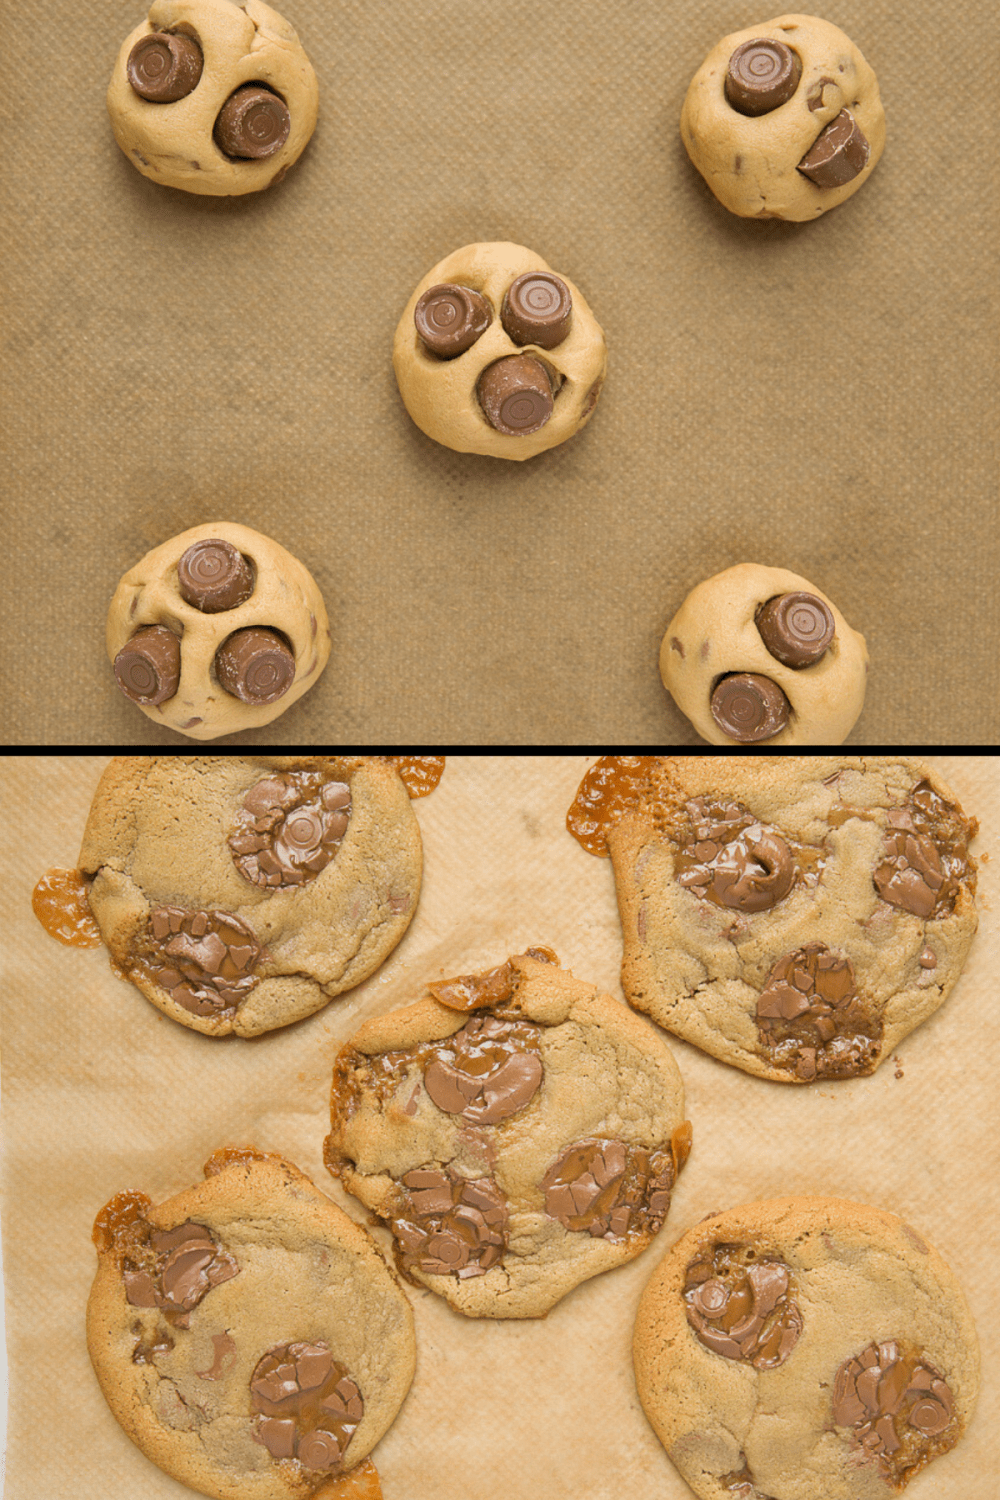 Comparison of cookies. 